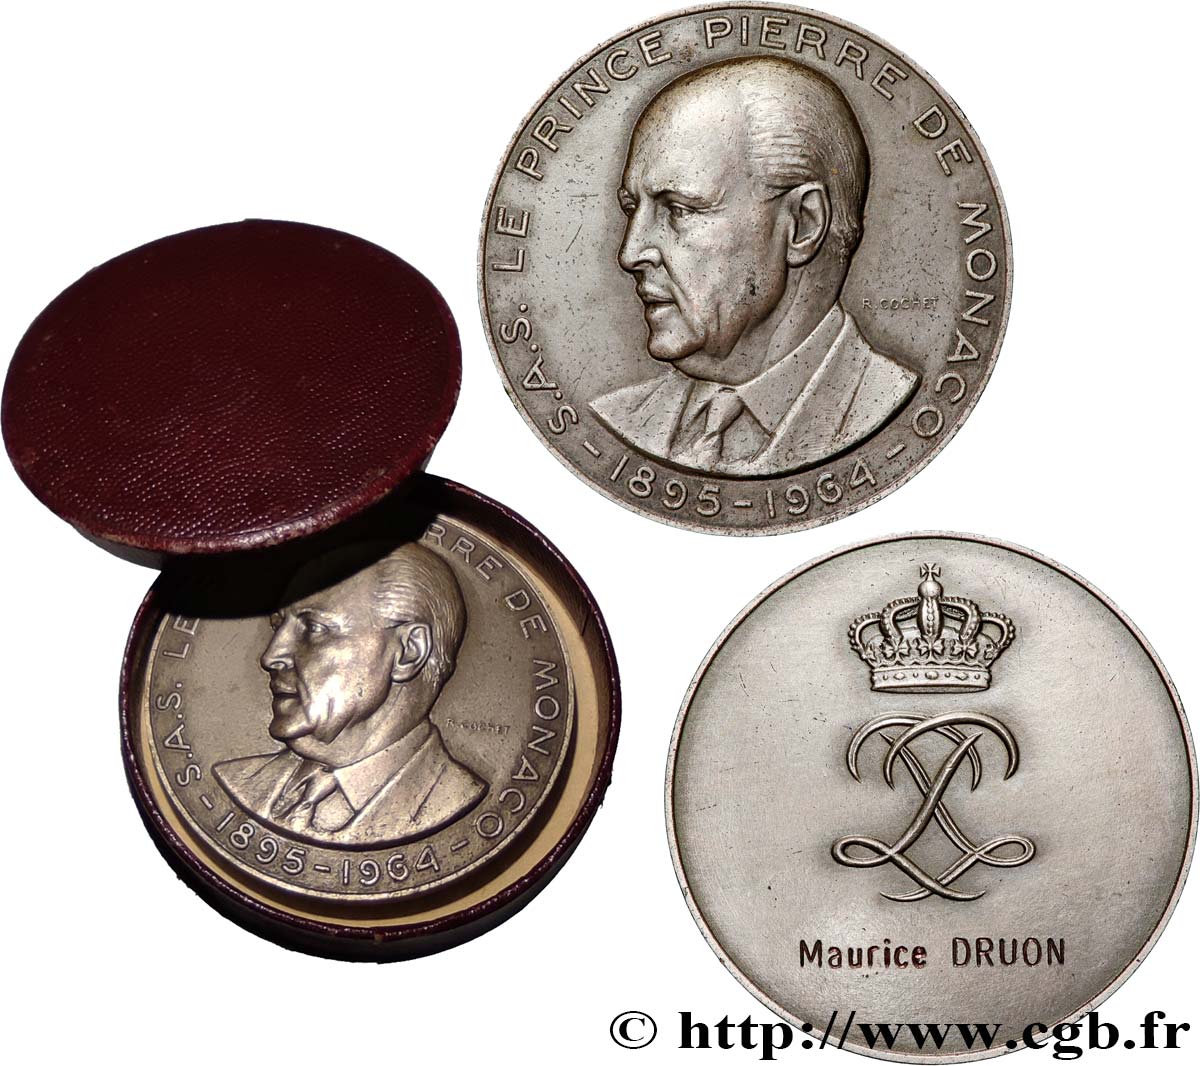 MONACO - PRINCIPALITY OF MONACO - RAINIER III Médaille, Prince Pierre de Monaco AU